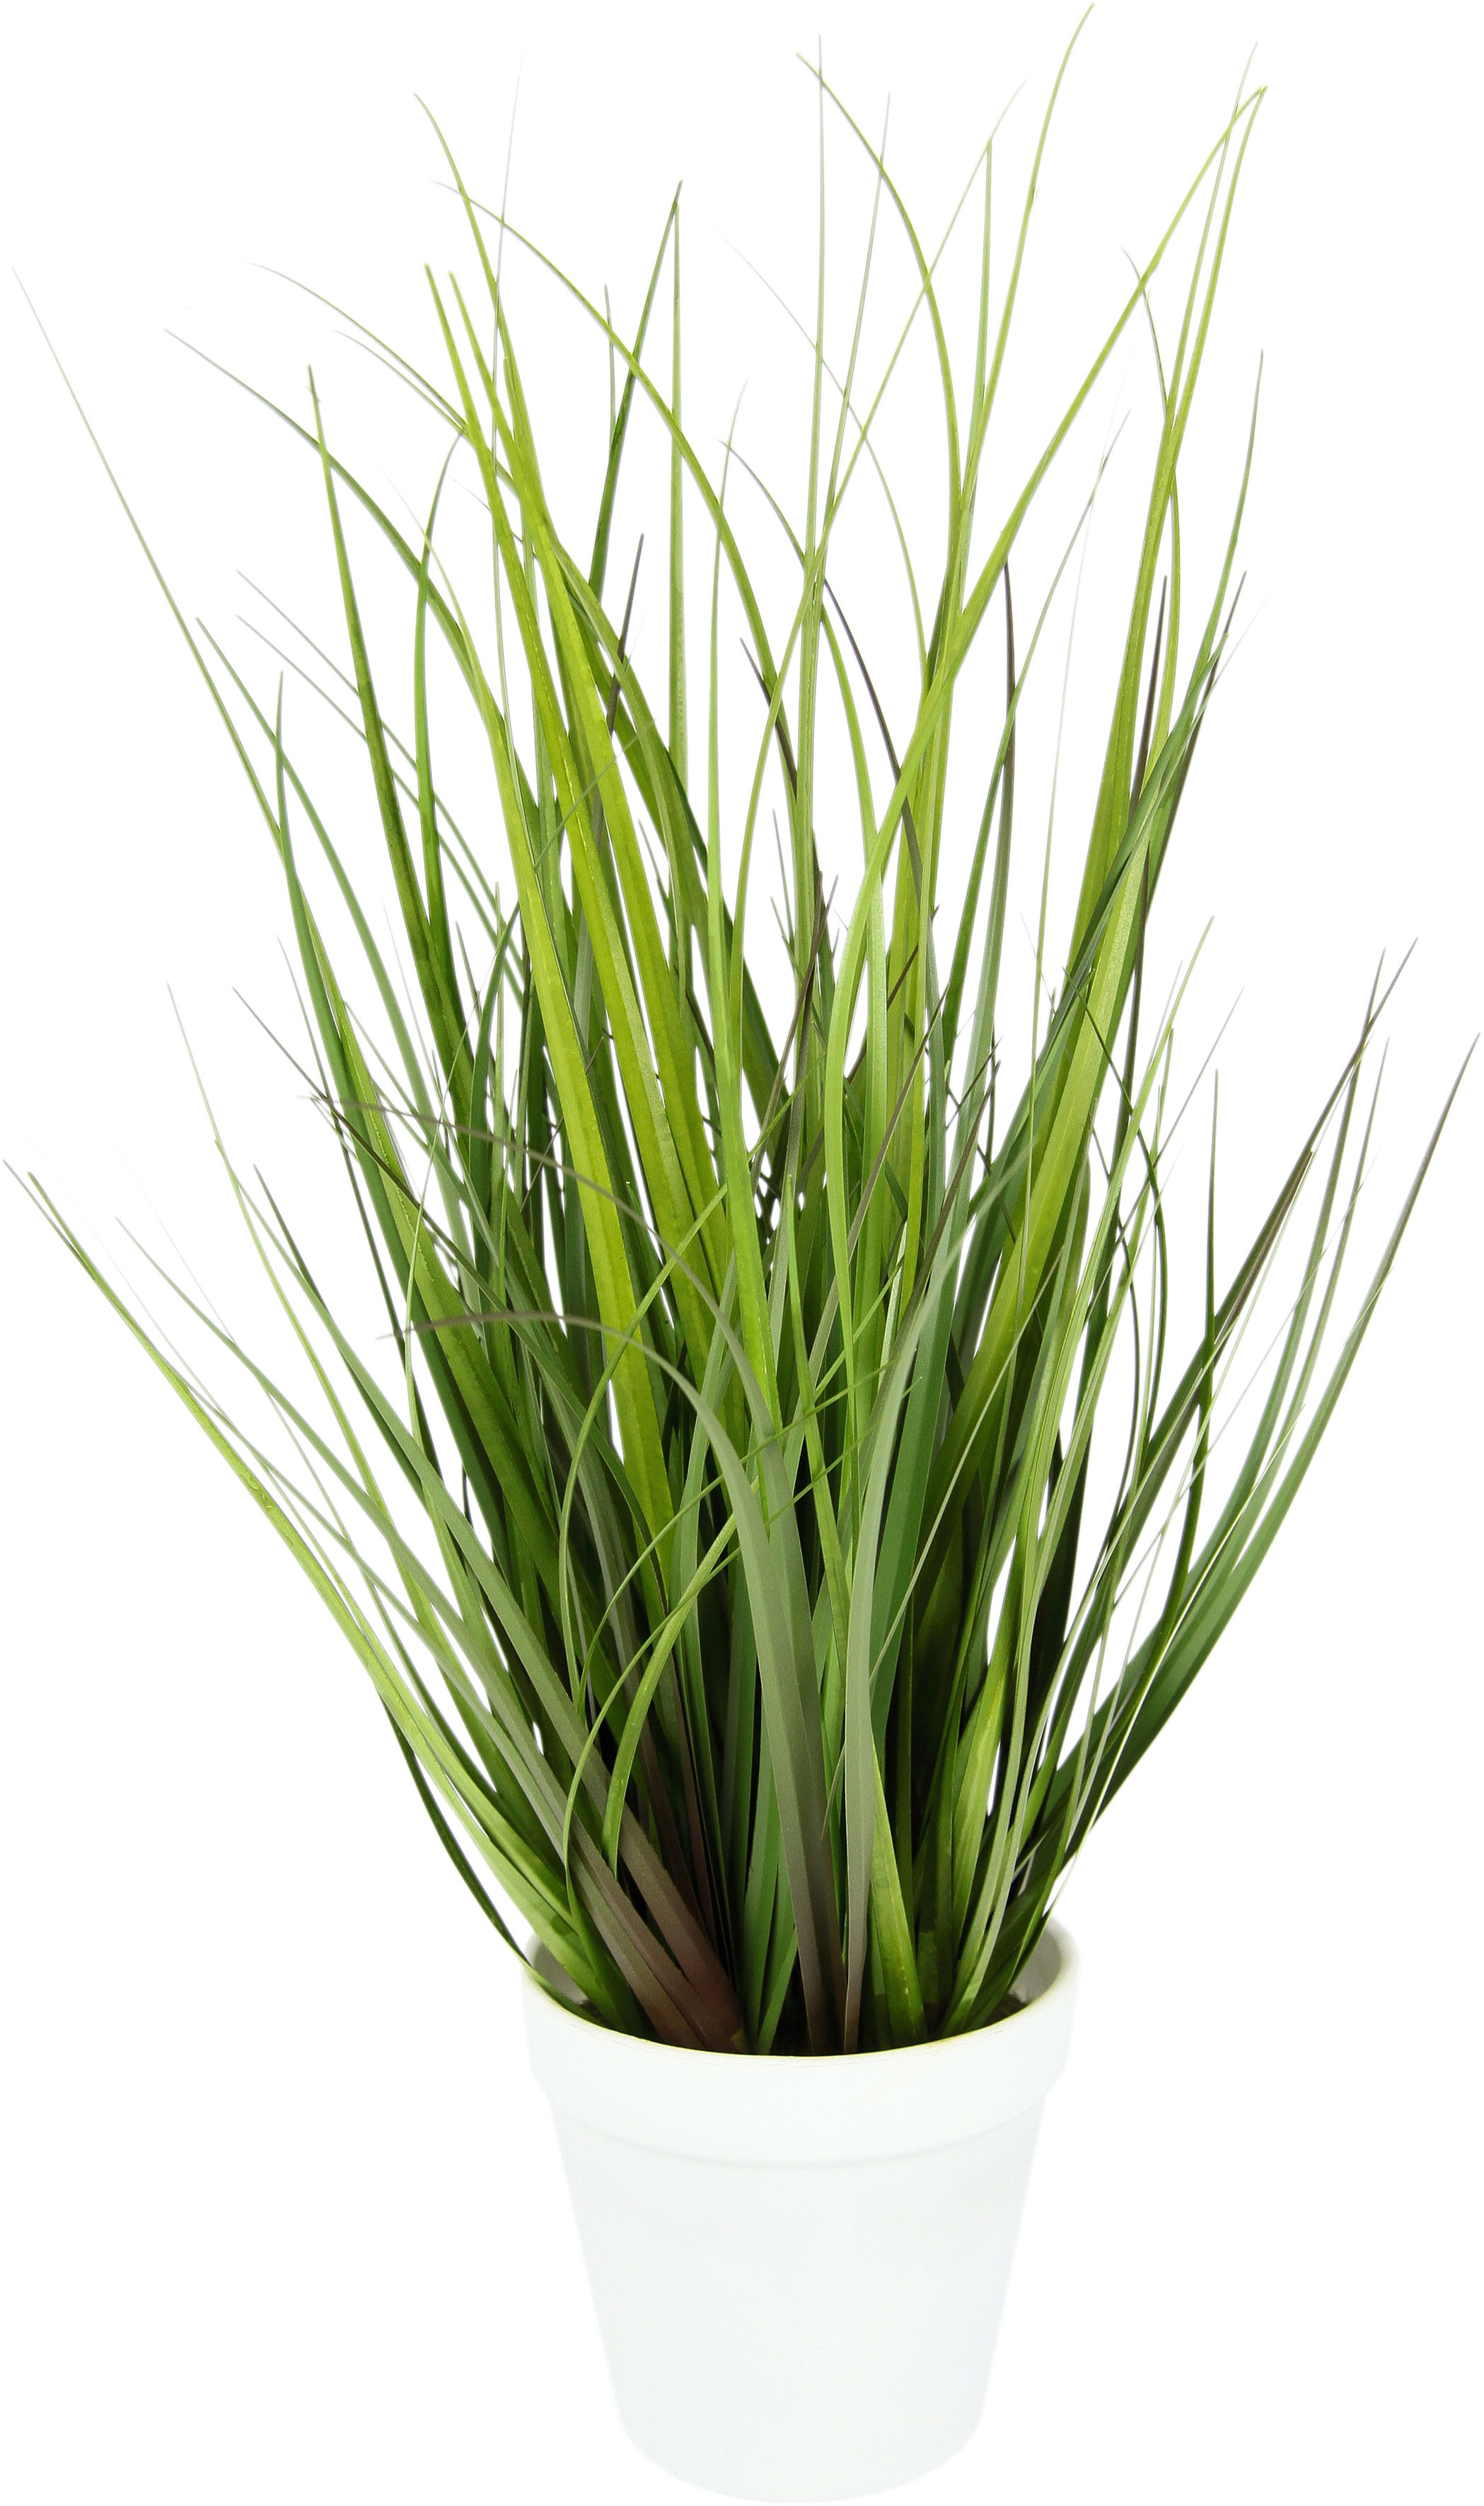 »Pothospflanze in I.GE.A. OTTO Wasserhyazinthentopf« bei Kunstpflanze online